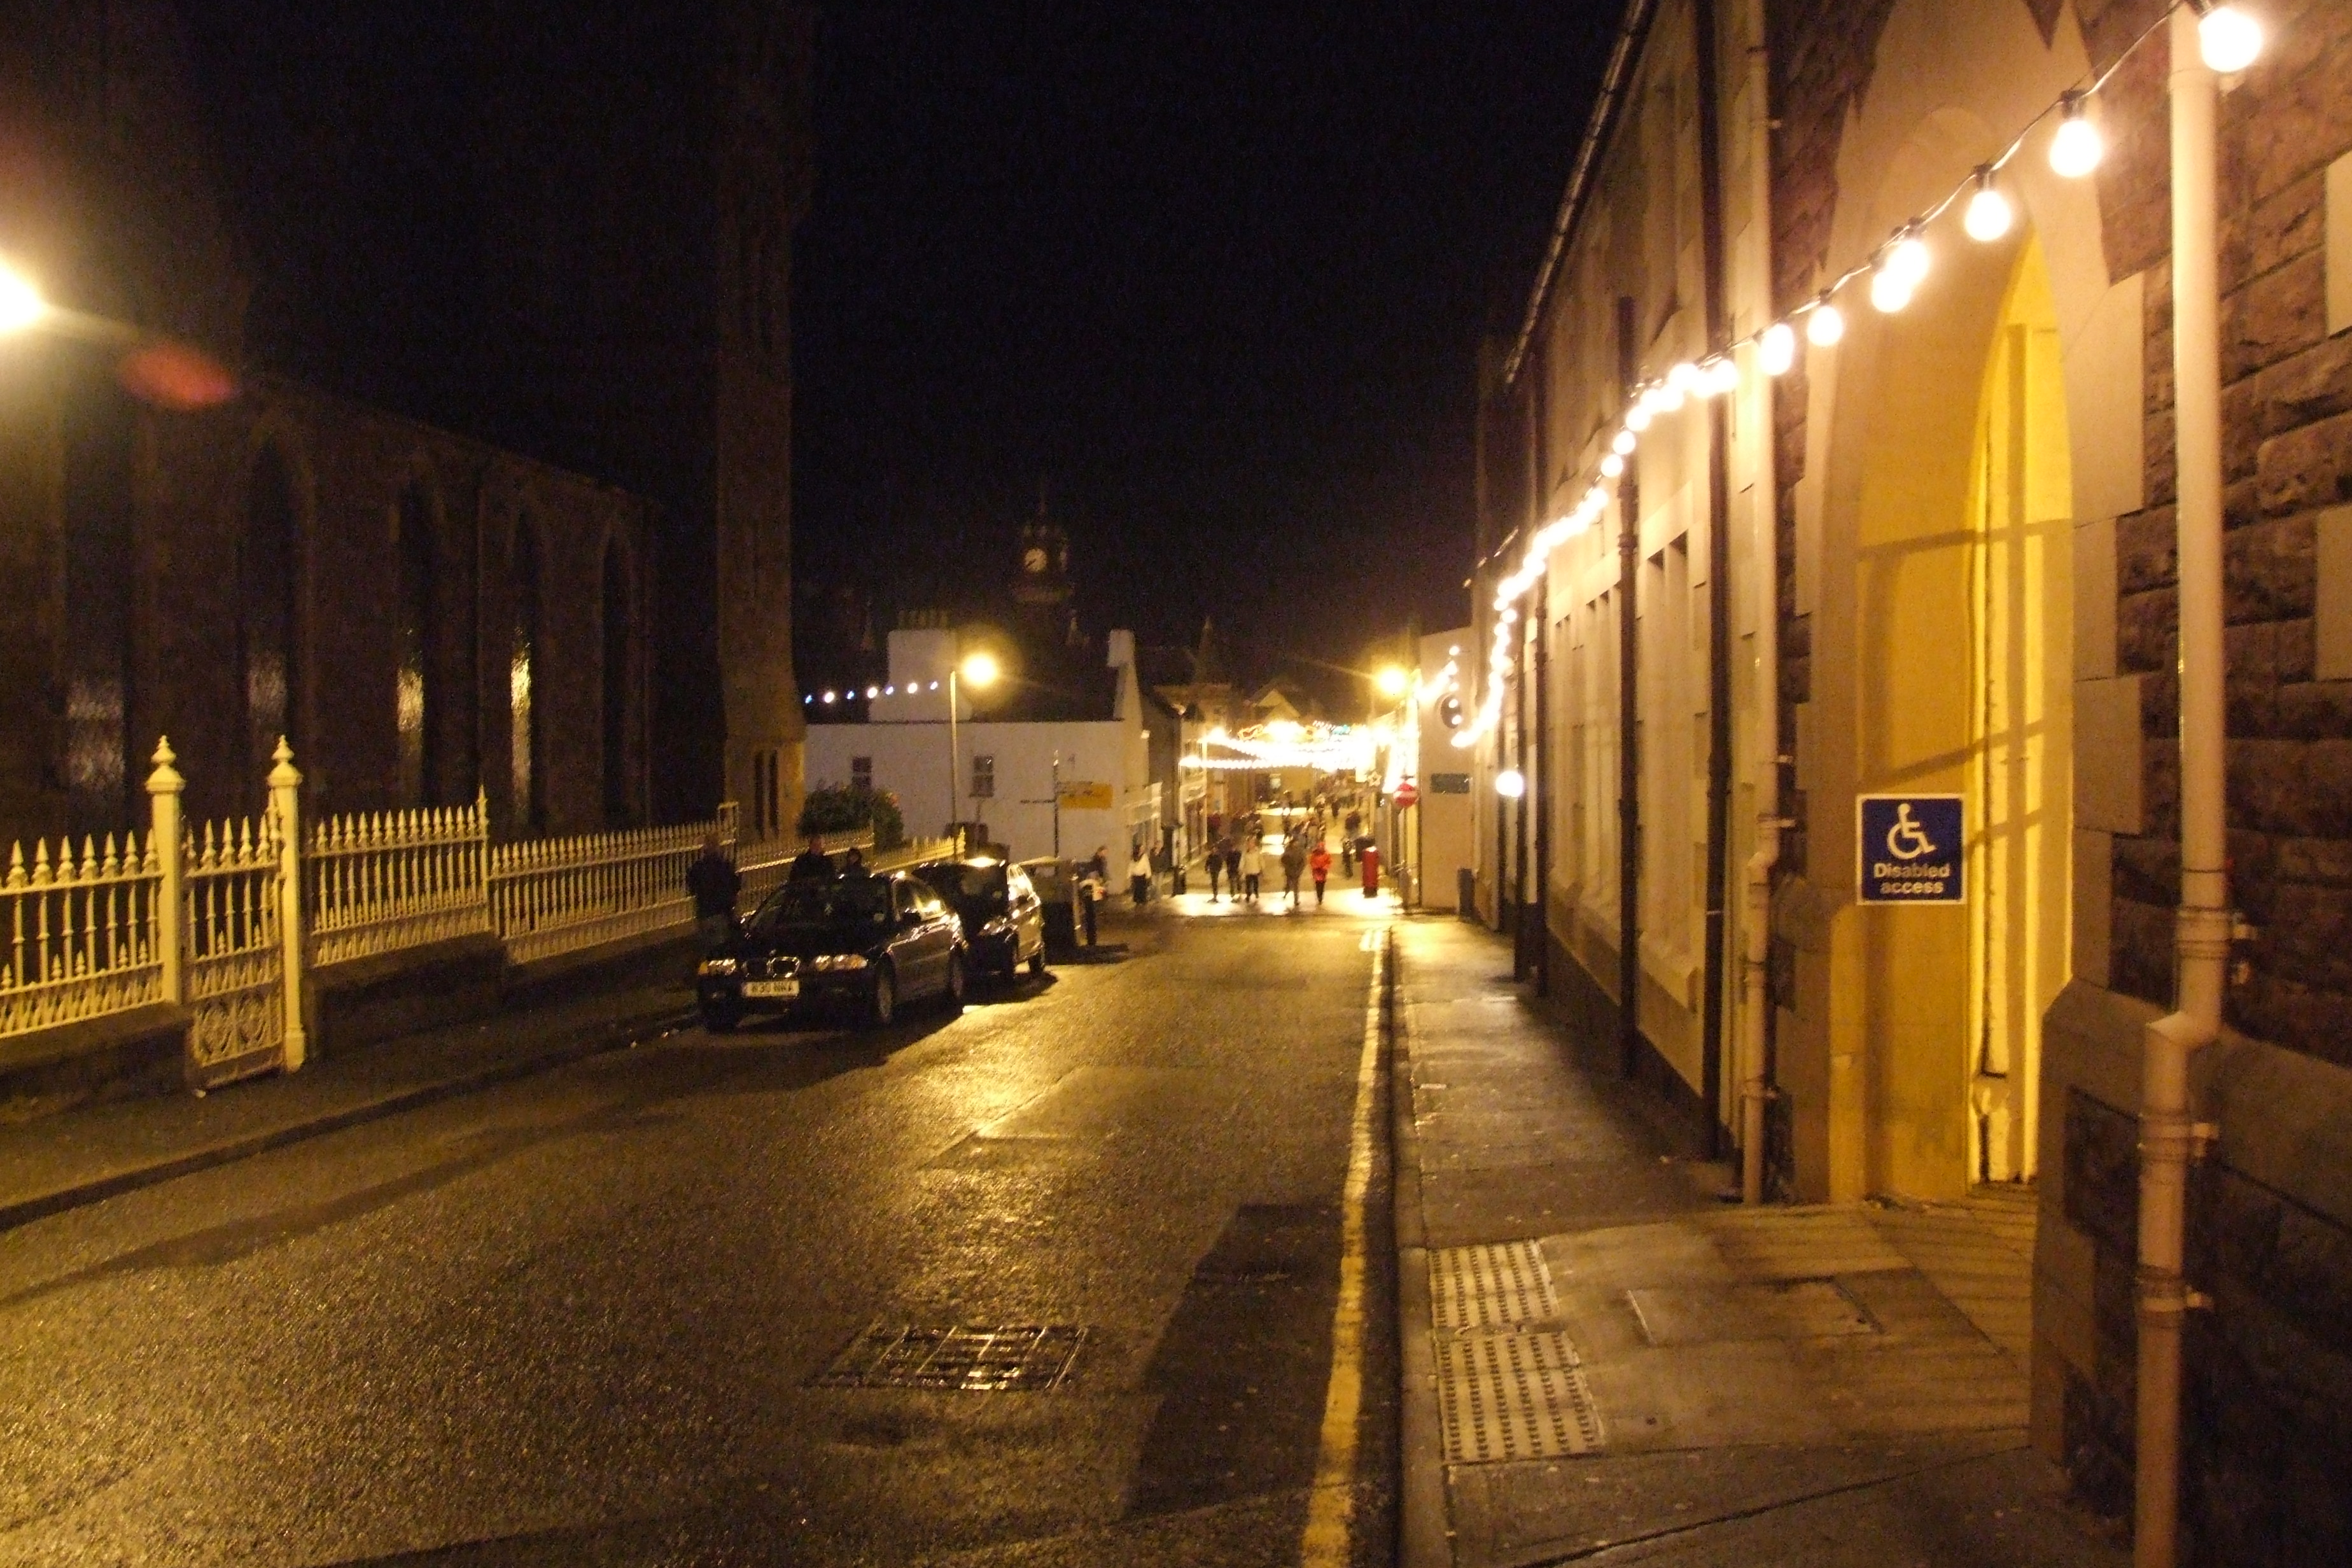 Photograph: Stornoway By Night